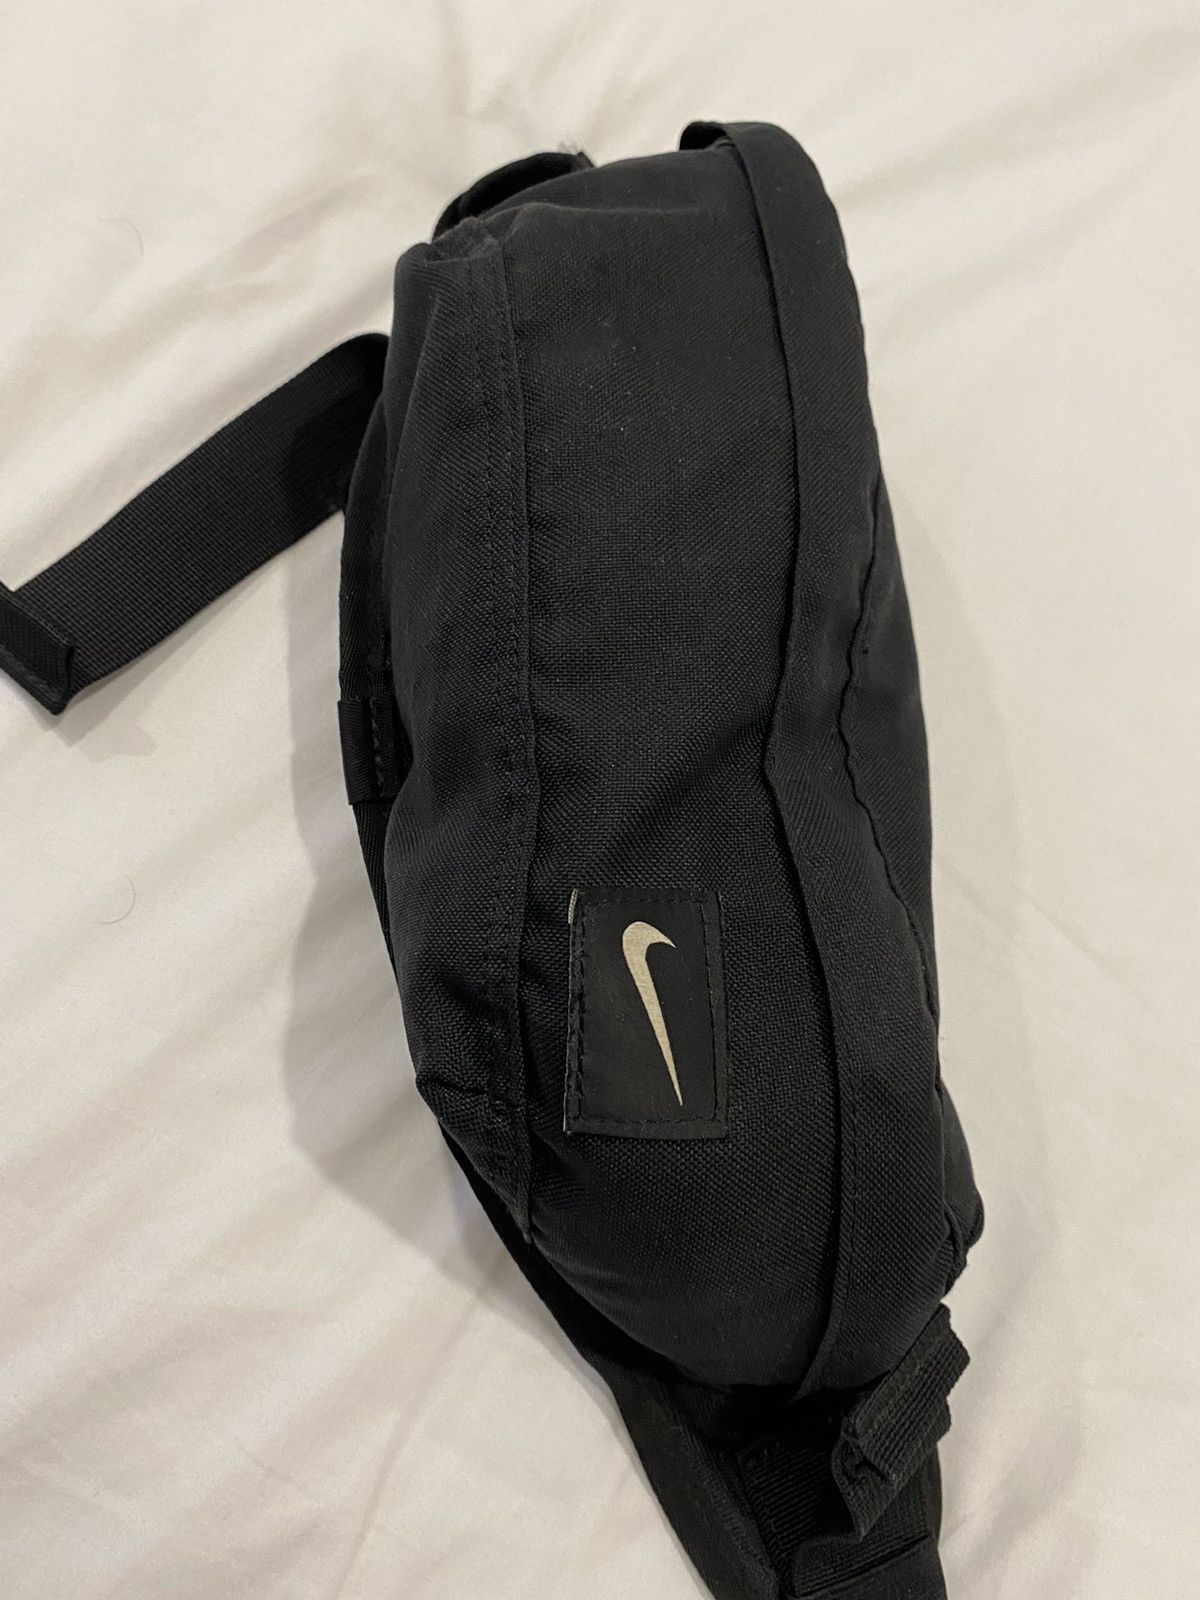 Authentic Nike Waist Pouch Bag - 6